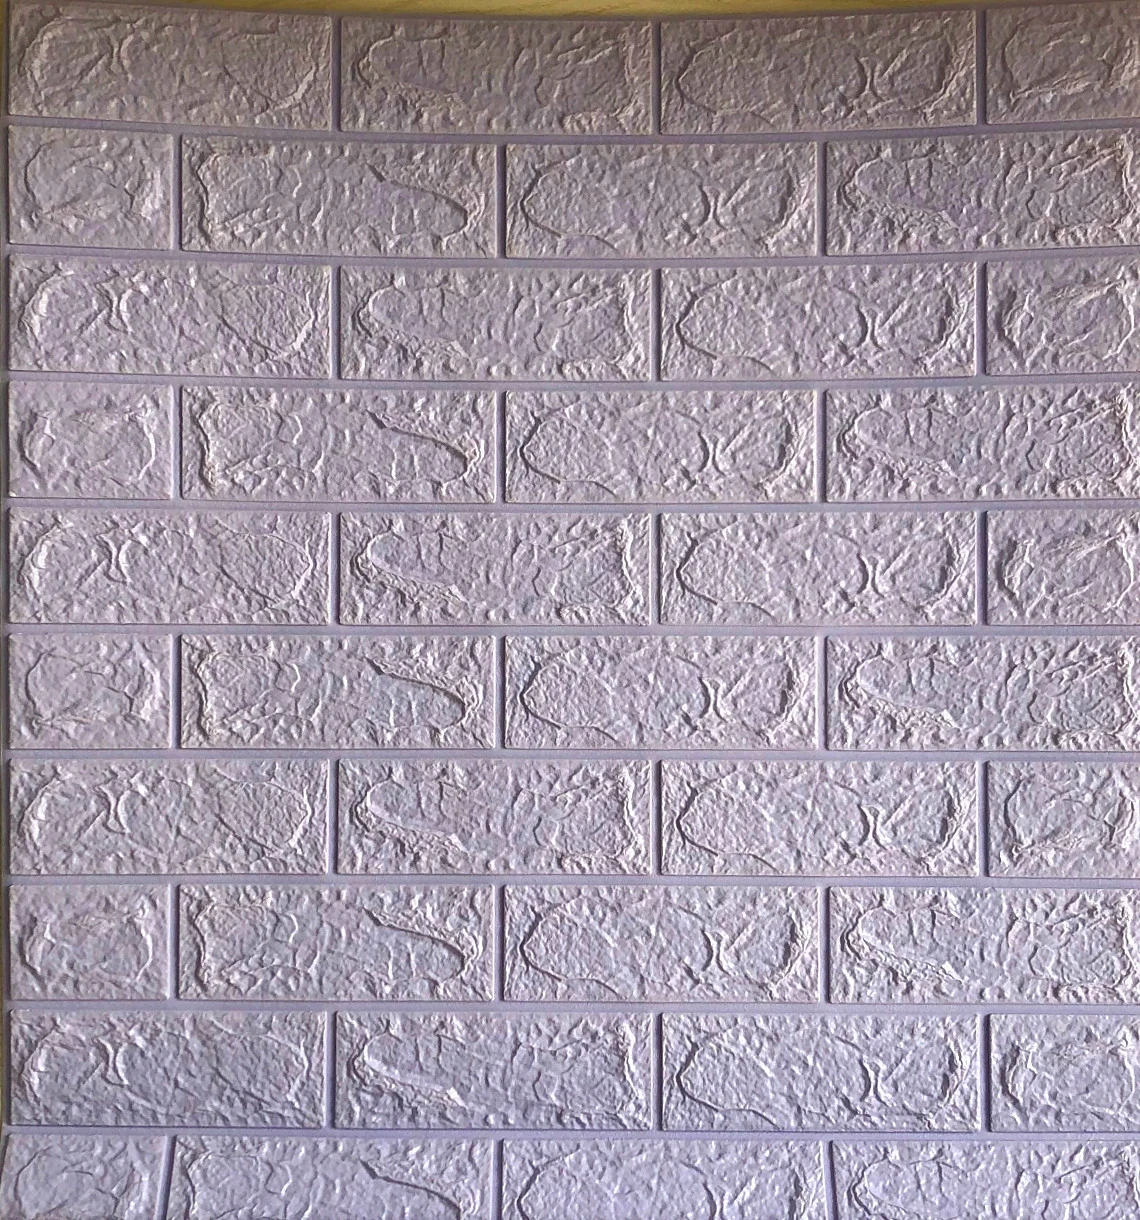 70x77 Wall Decoration 3D Pe Foam Wall Brick Leather Panel Teal Wallpaper